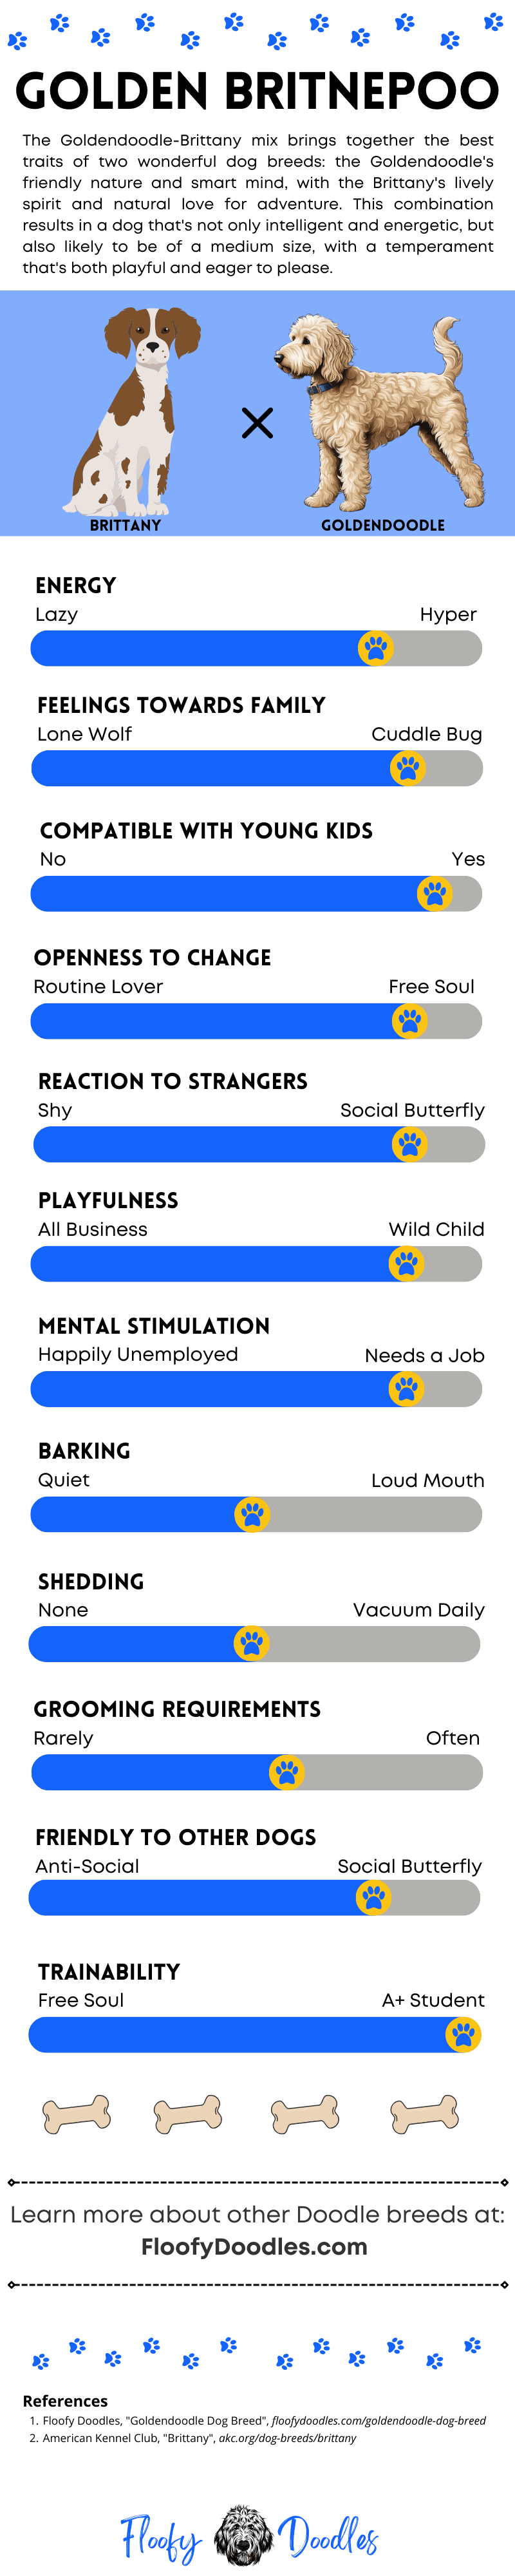 Golden Britnepoo traits and characteristics infographic.